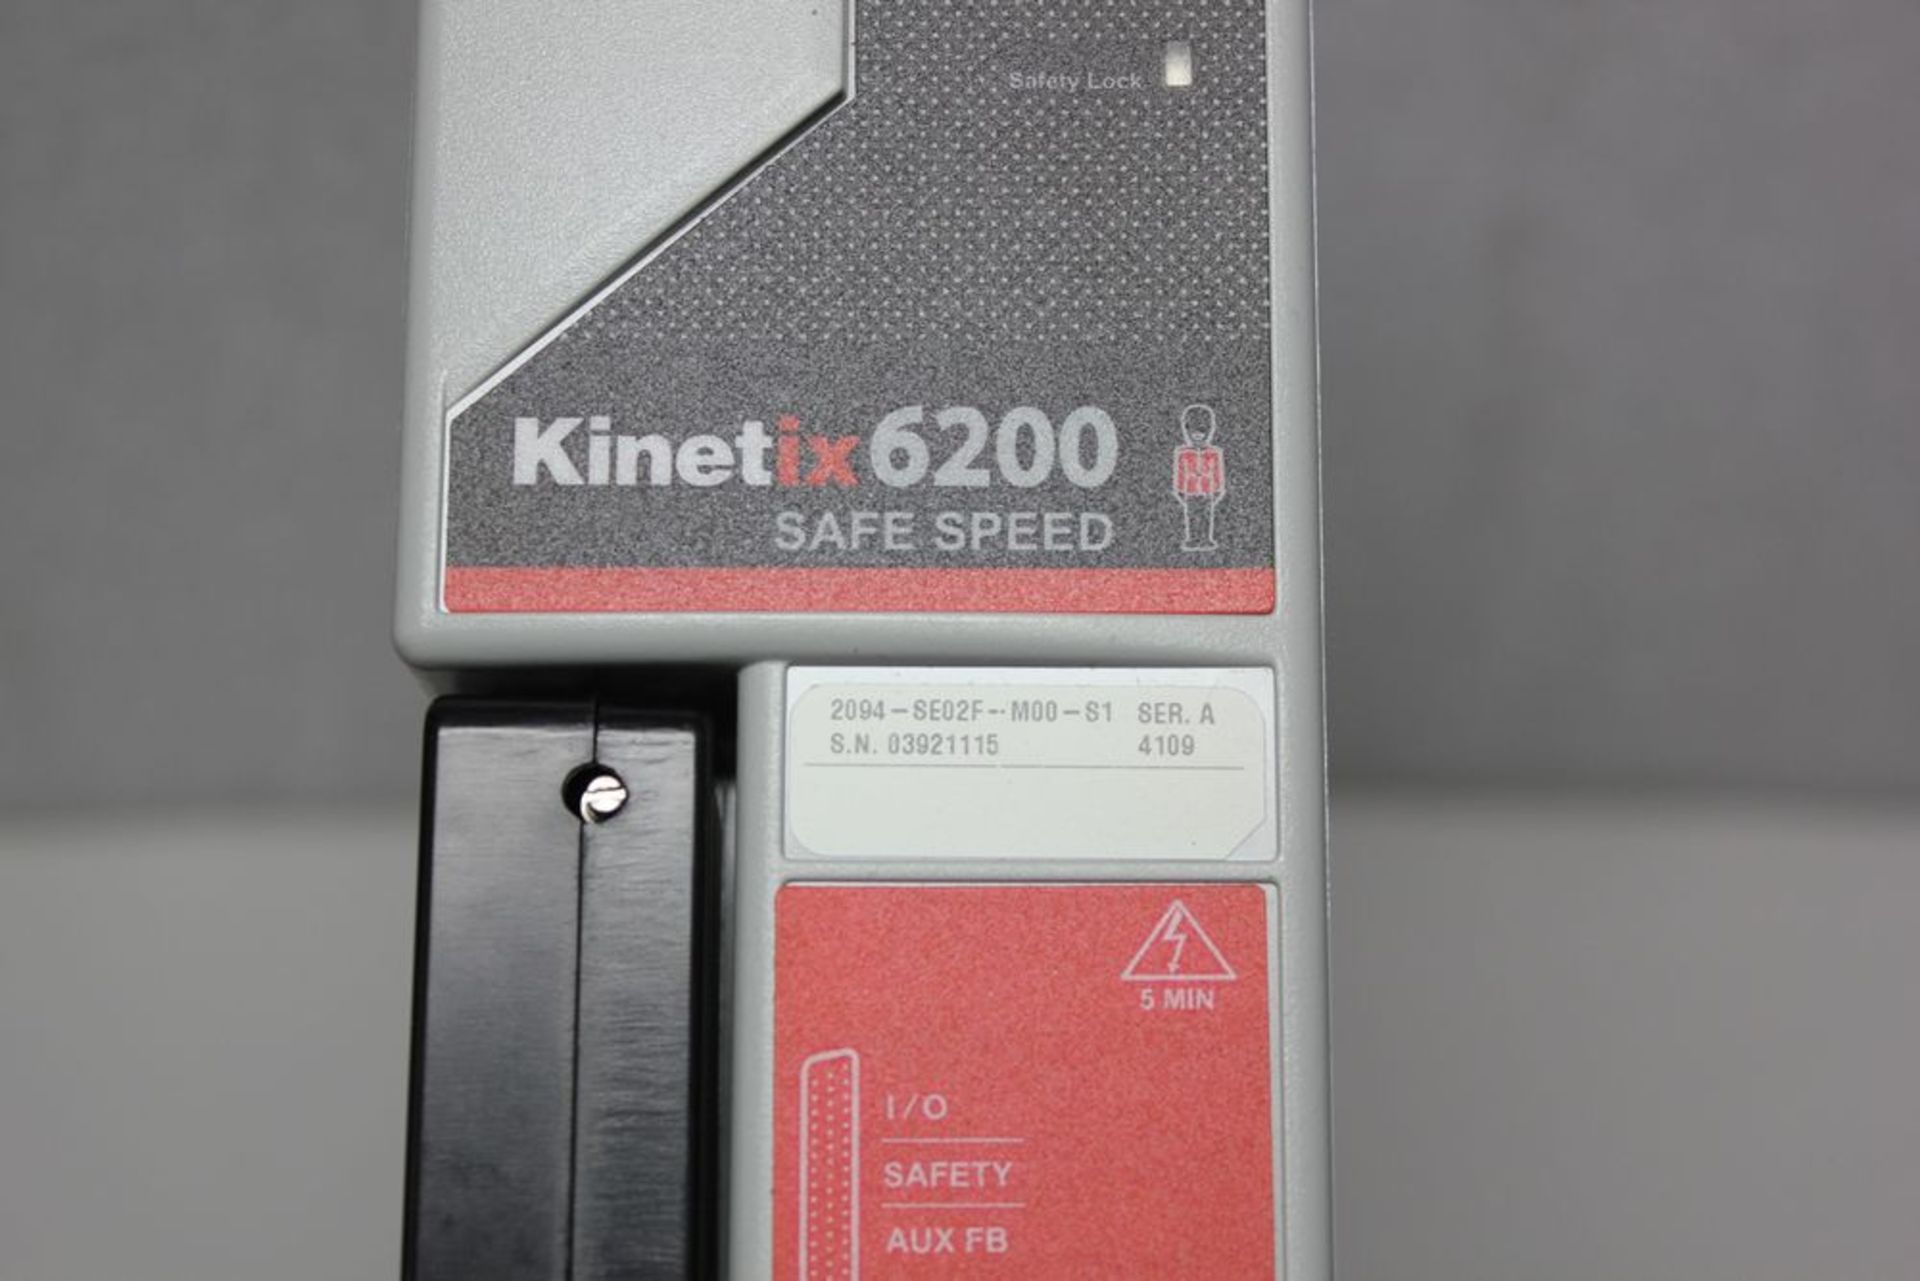 ALLEN BRADLEY KINETIX 6200 AXIS POWER MODULE & SPEED CONTROL - Image 5 of 8